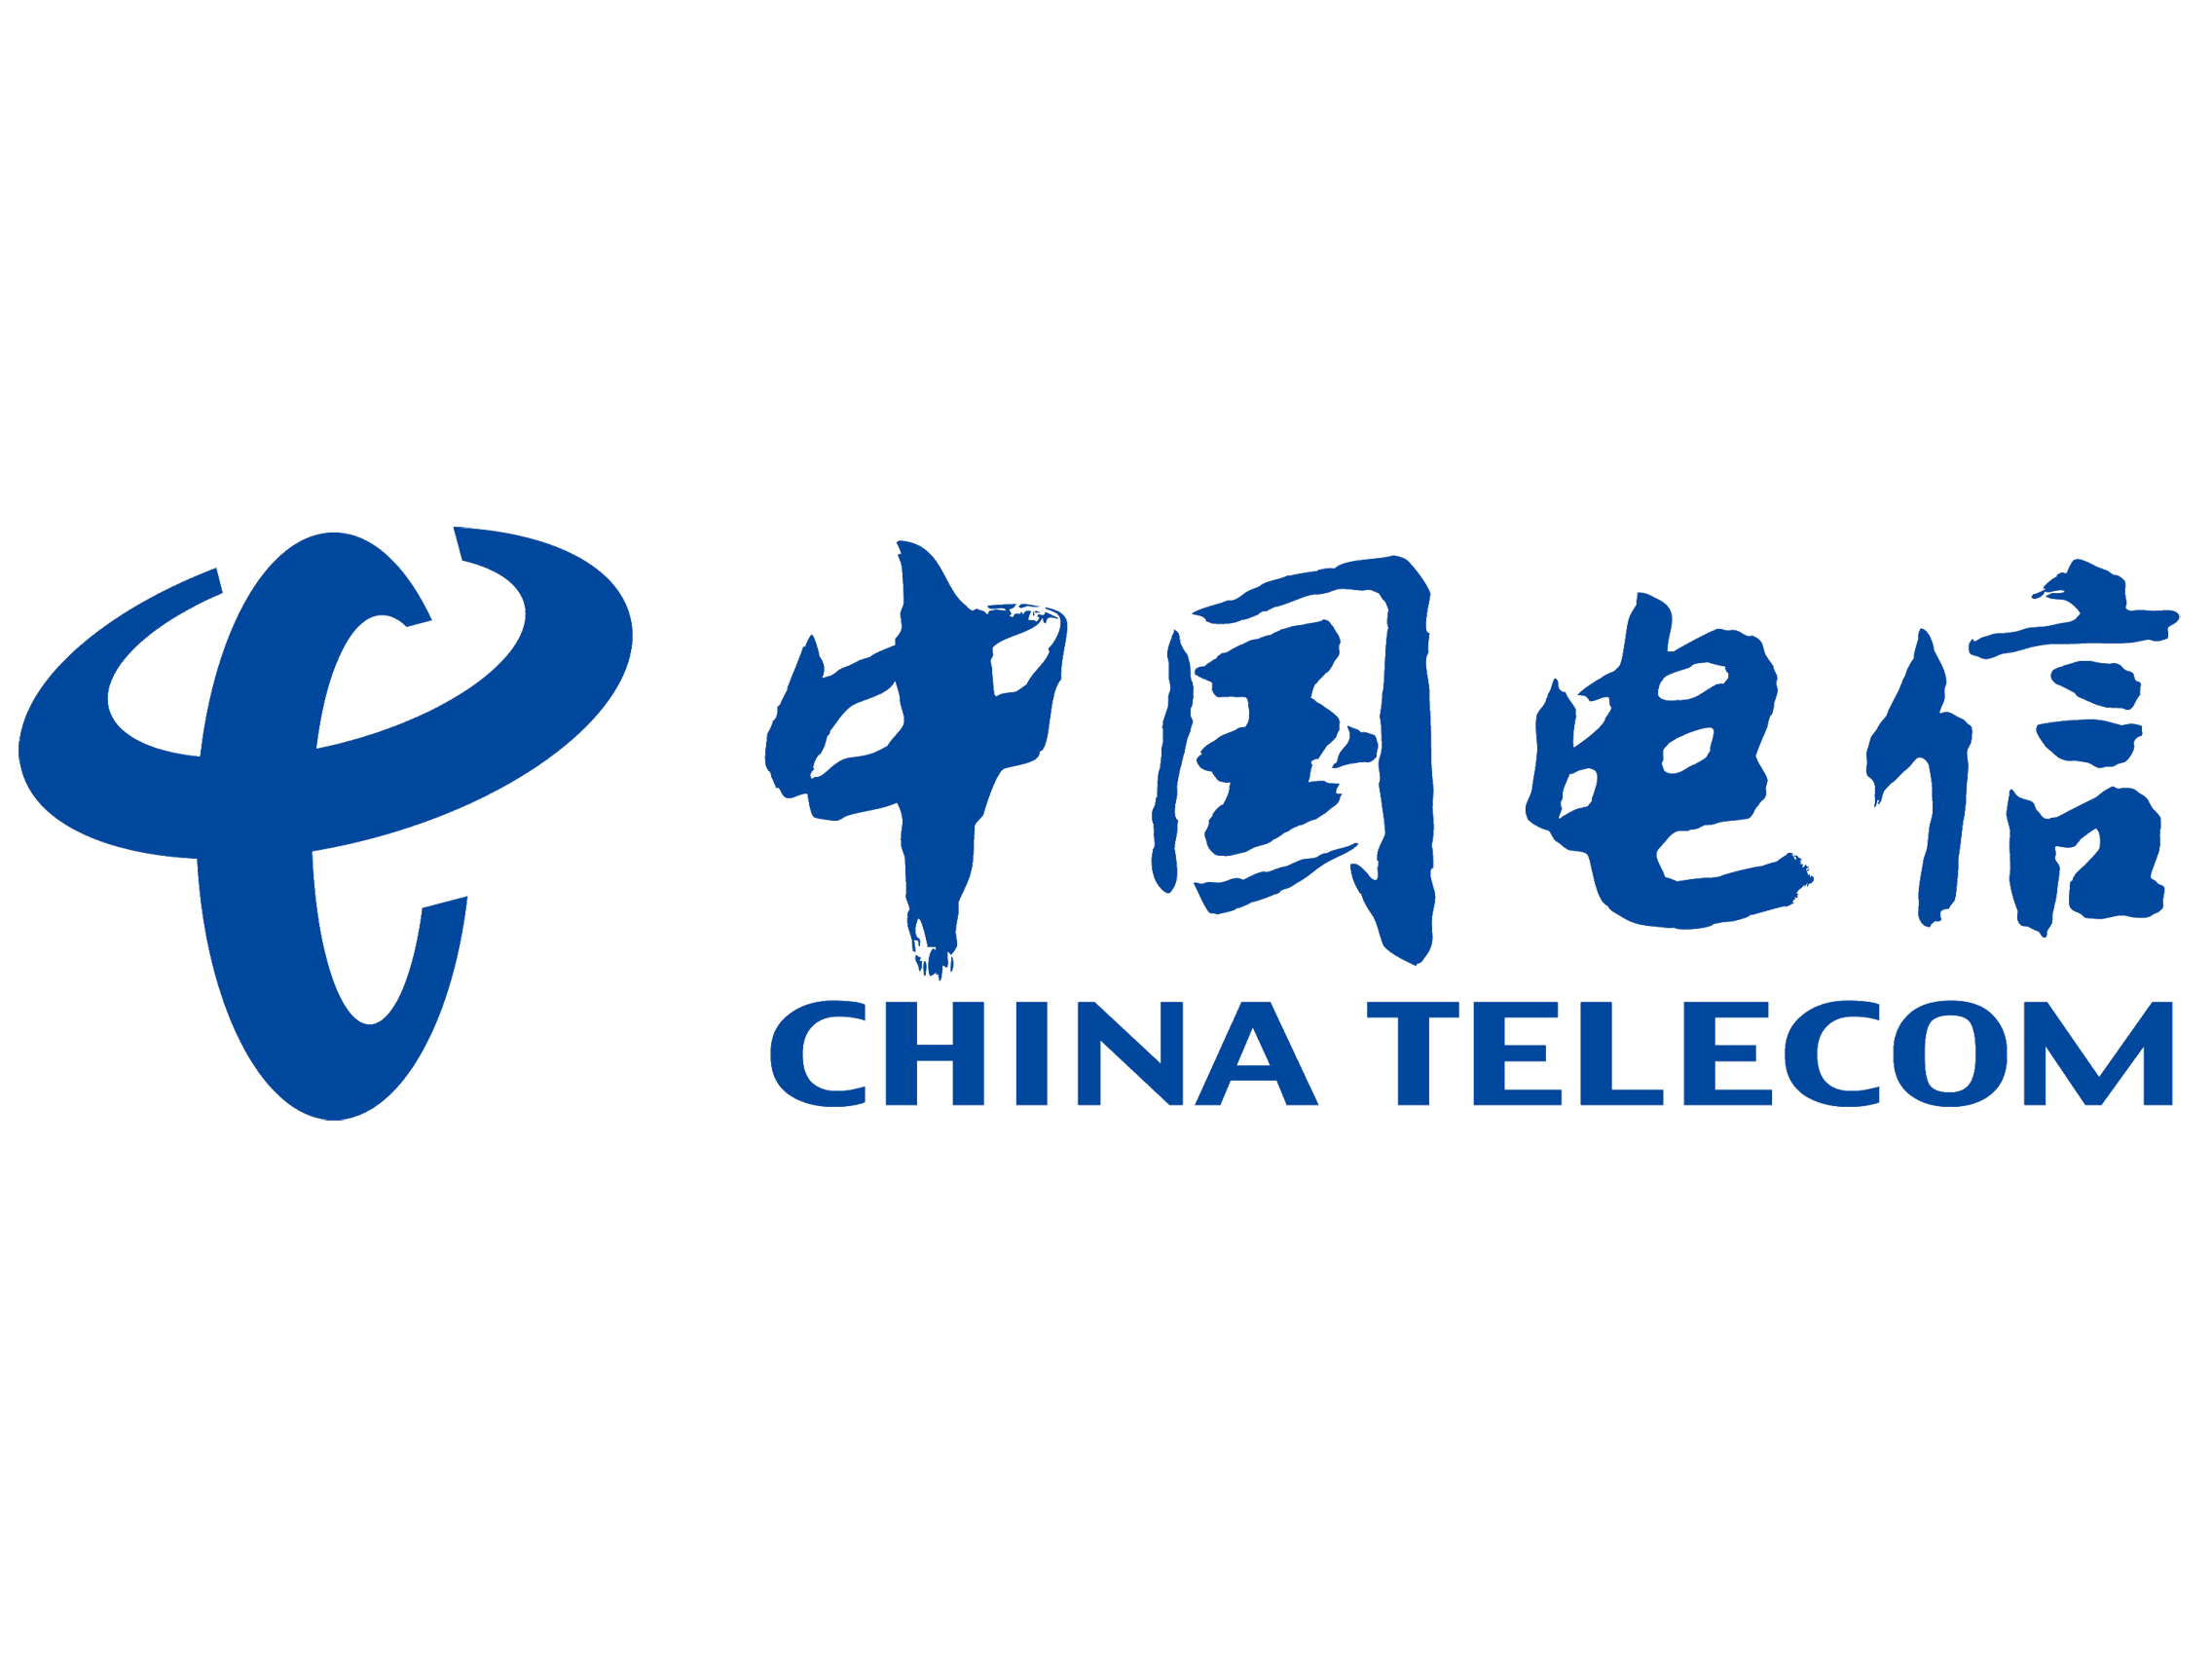 Telecom limited. China Telecom. China Telecom логотип. Китайская компания лого. Чайна Телеком Китай.